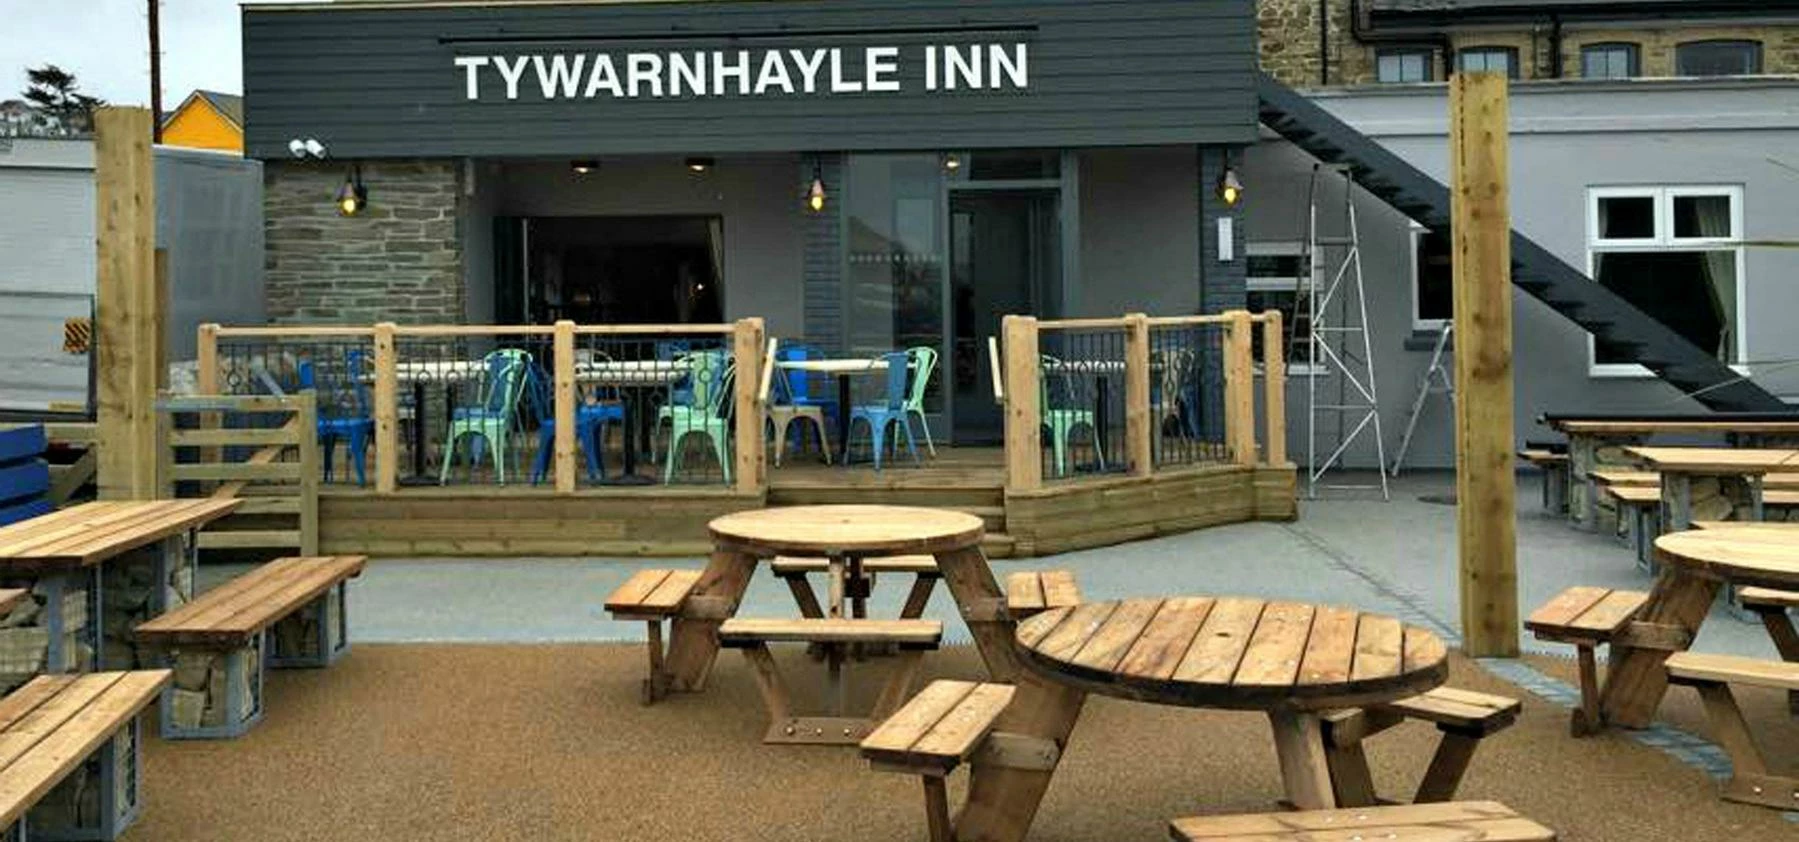 Tywarnhayle Inn, Cornwall 